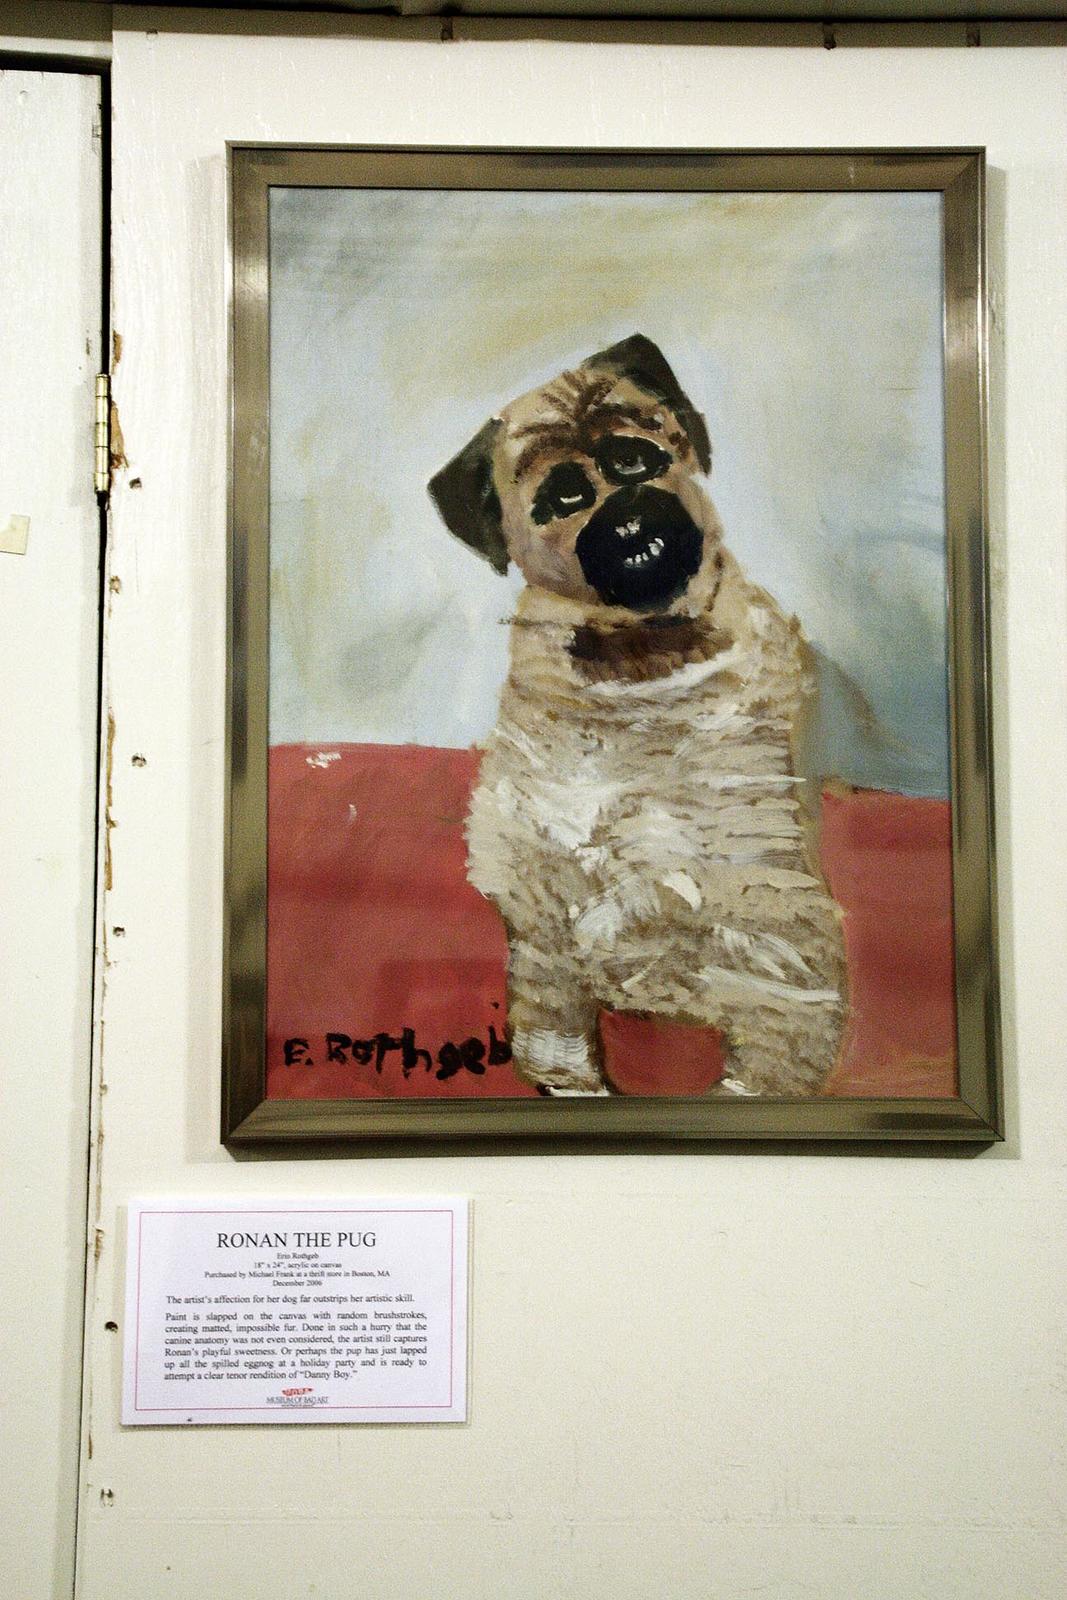 Ronan the pug, Museum of Bad Art, Sommerville Theatre, Sommervil